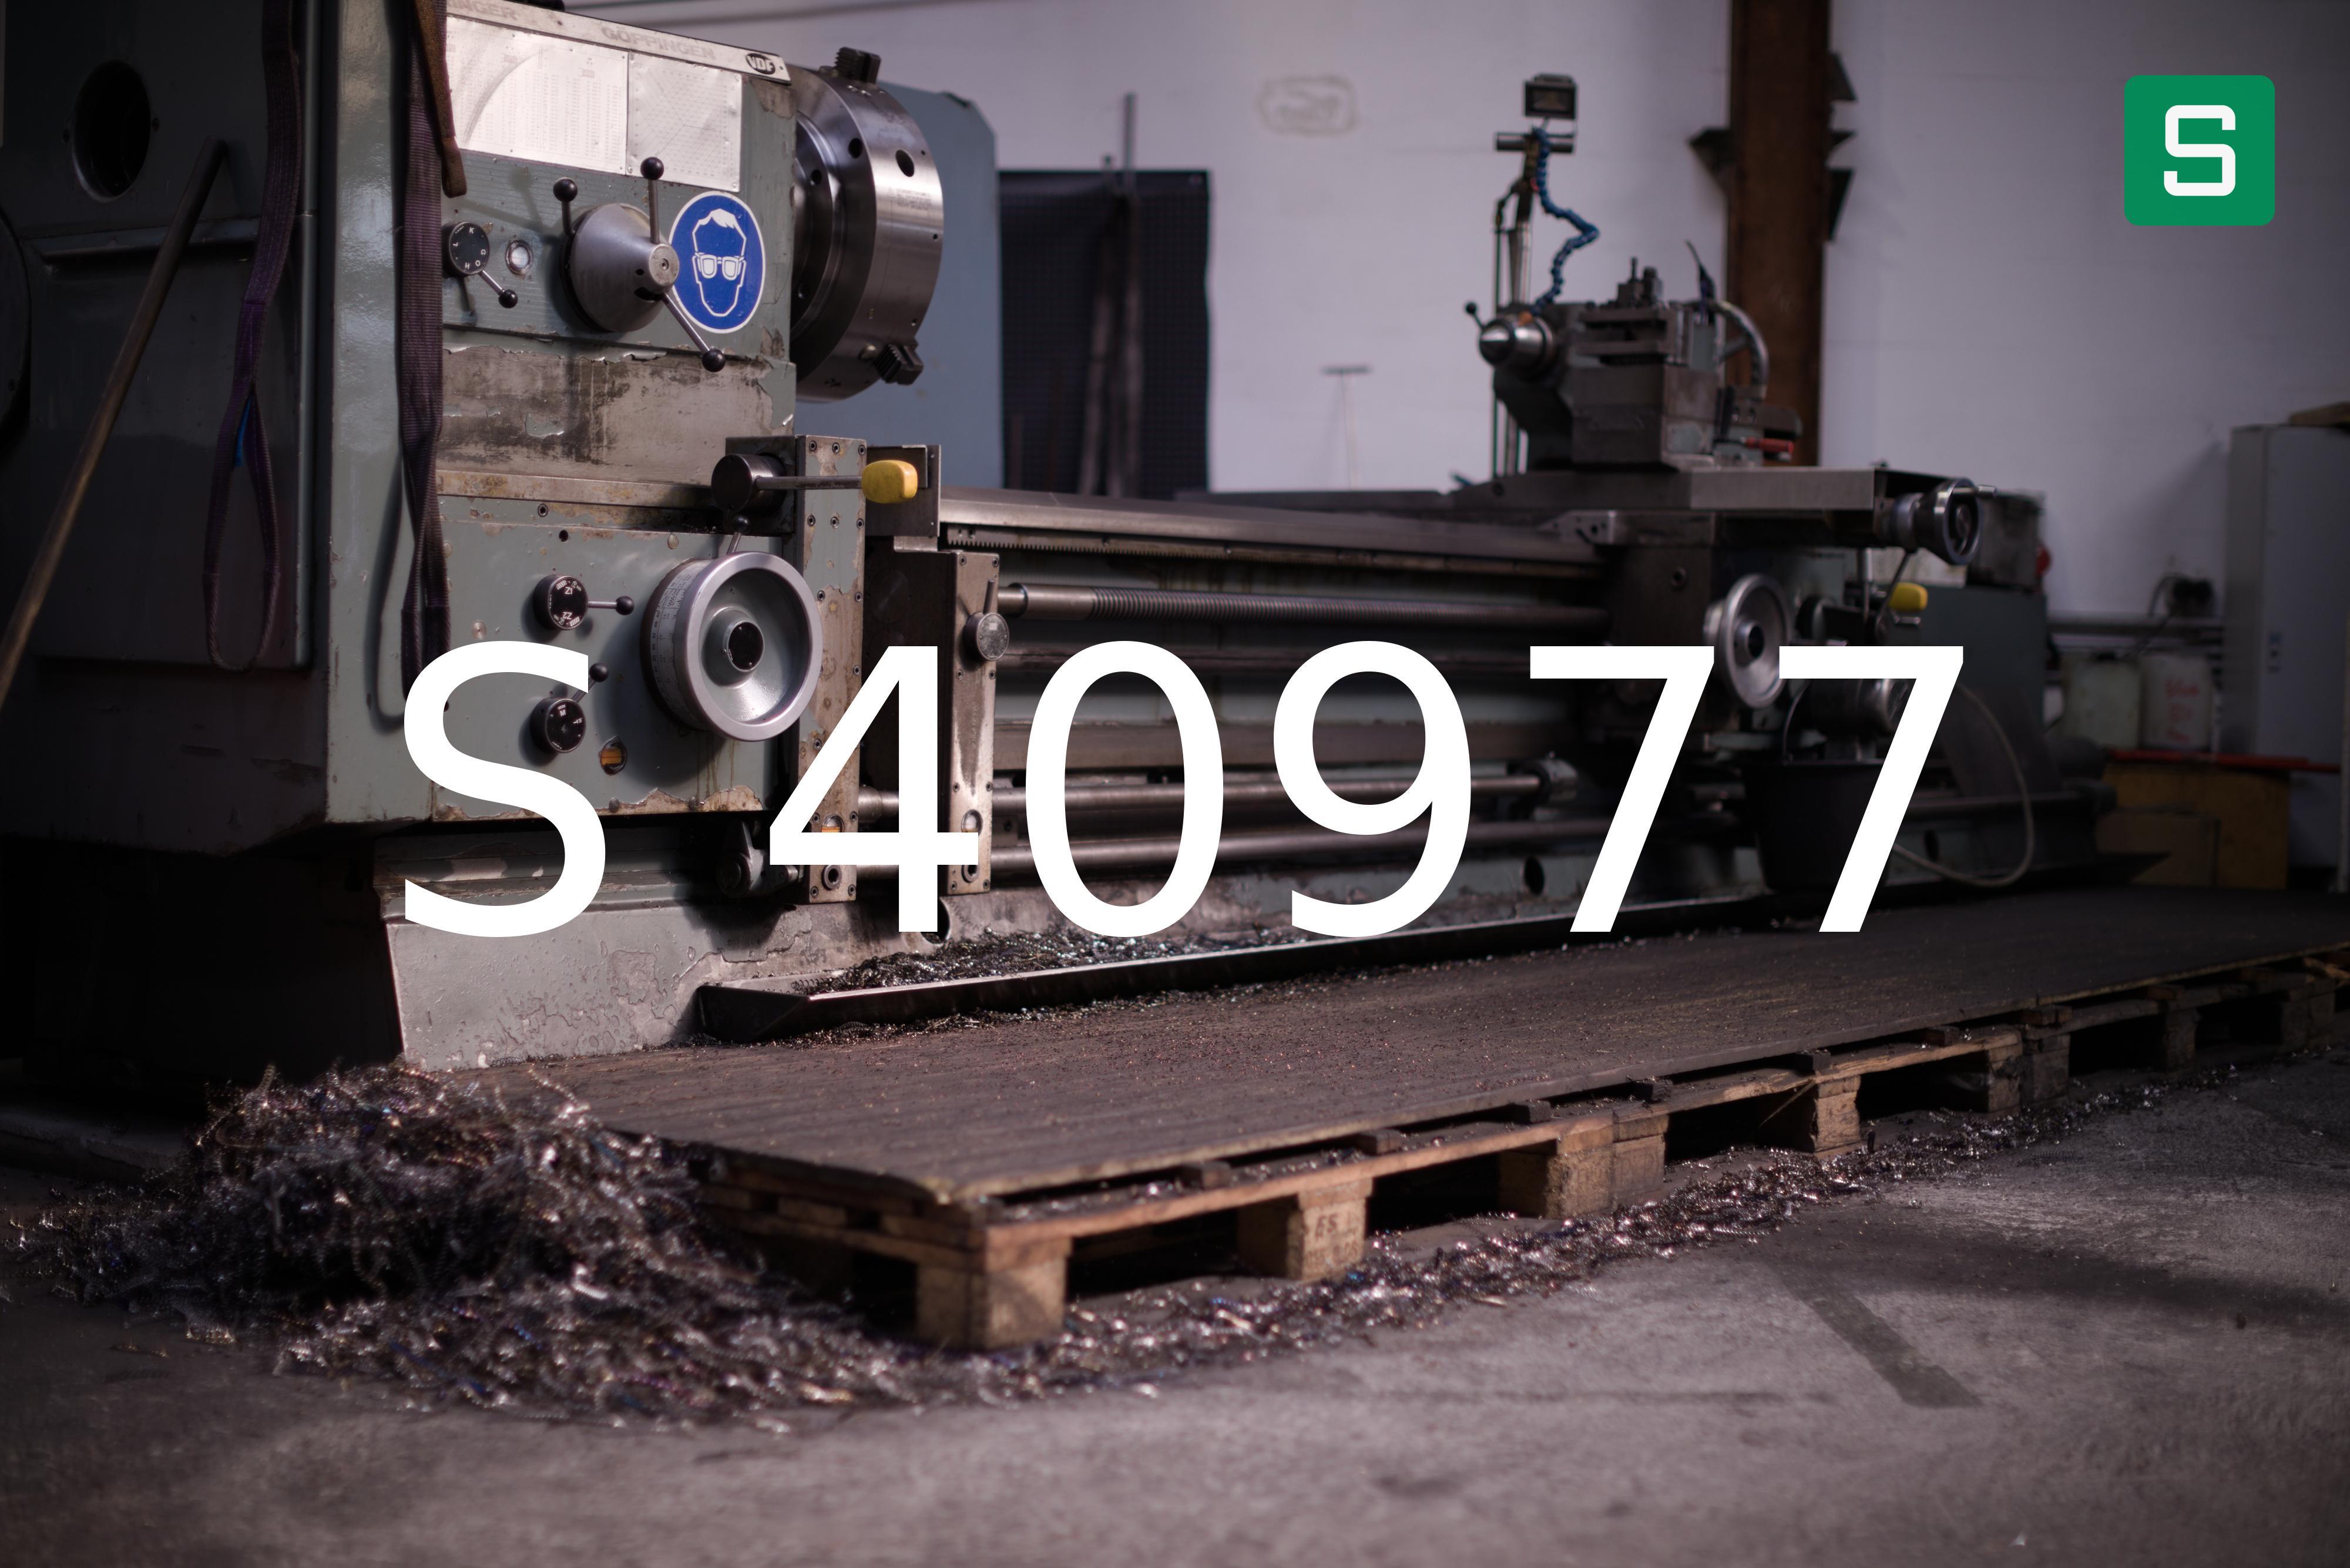 Steel Material: S 40977